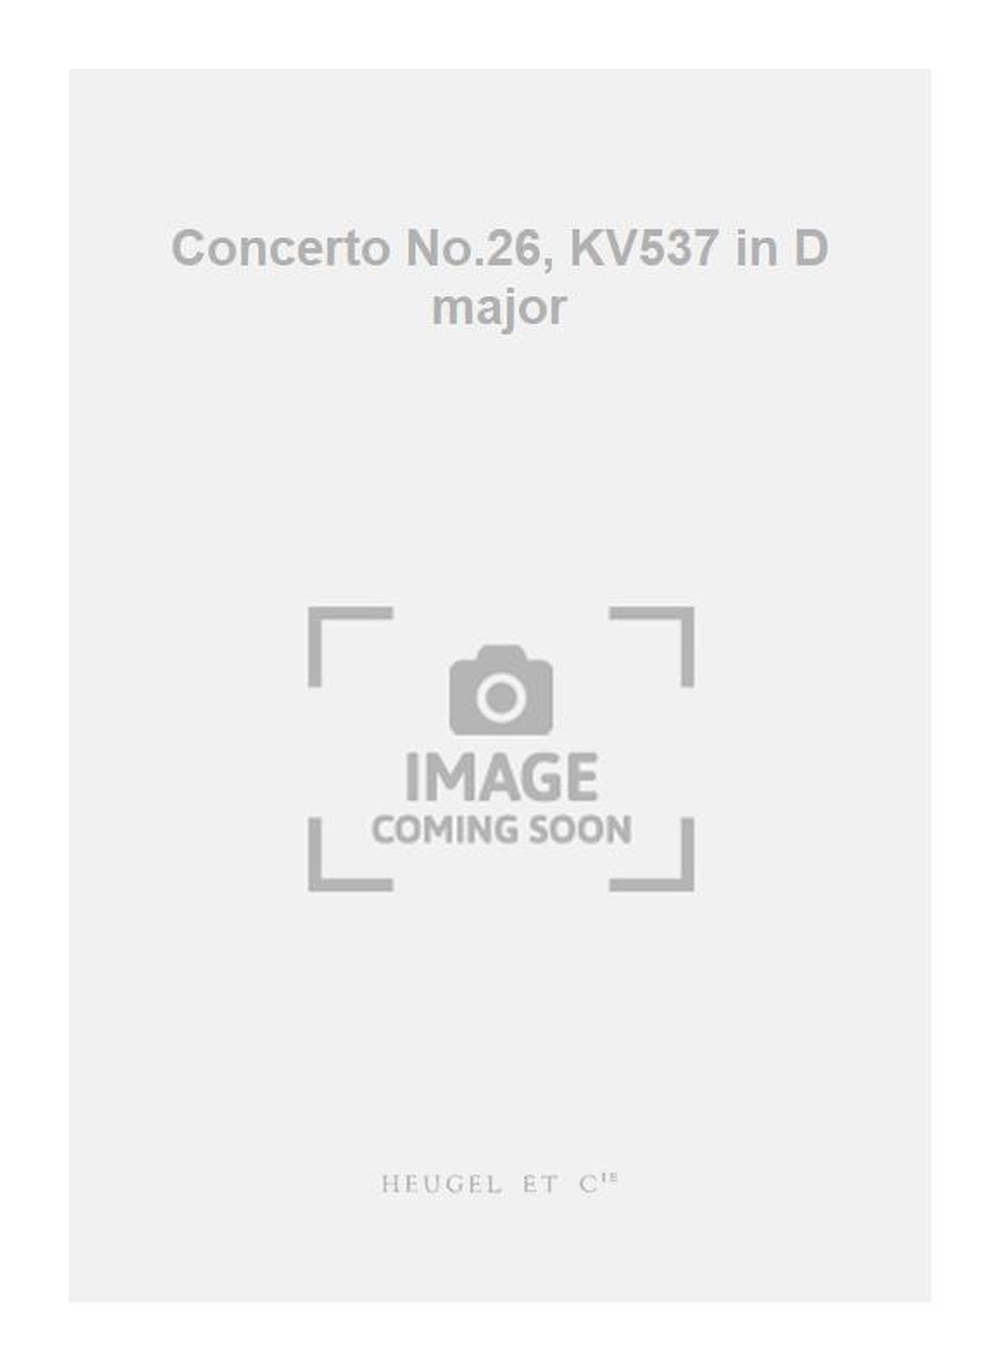 Wolfgang Amadeus Mozart: Concerto No.26  KV537 in D major